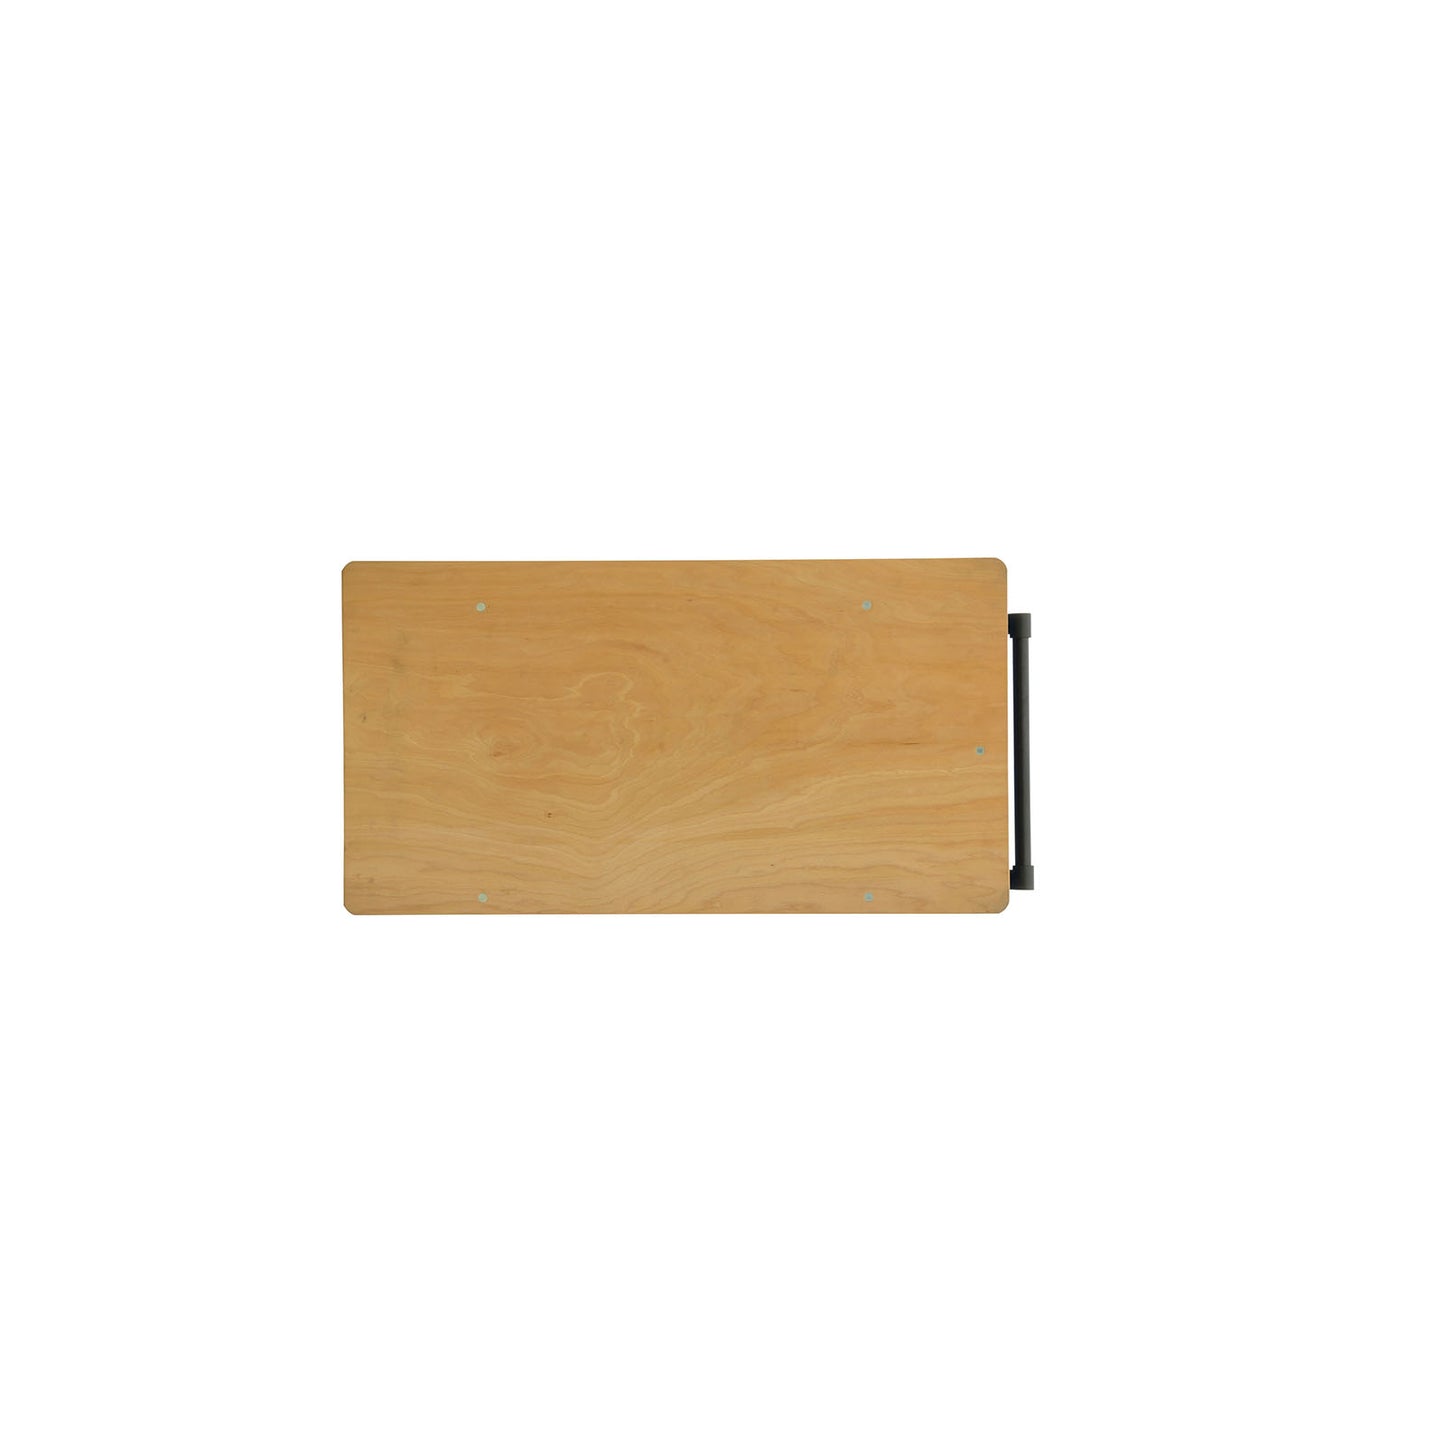 GEDORE 1507 XL 50001 - XL workbench 6 drawers (3127834)